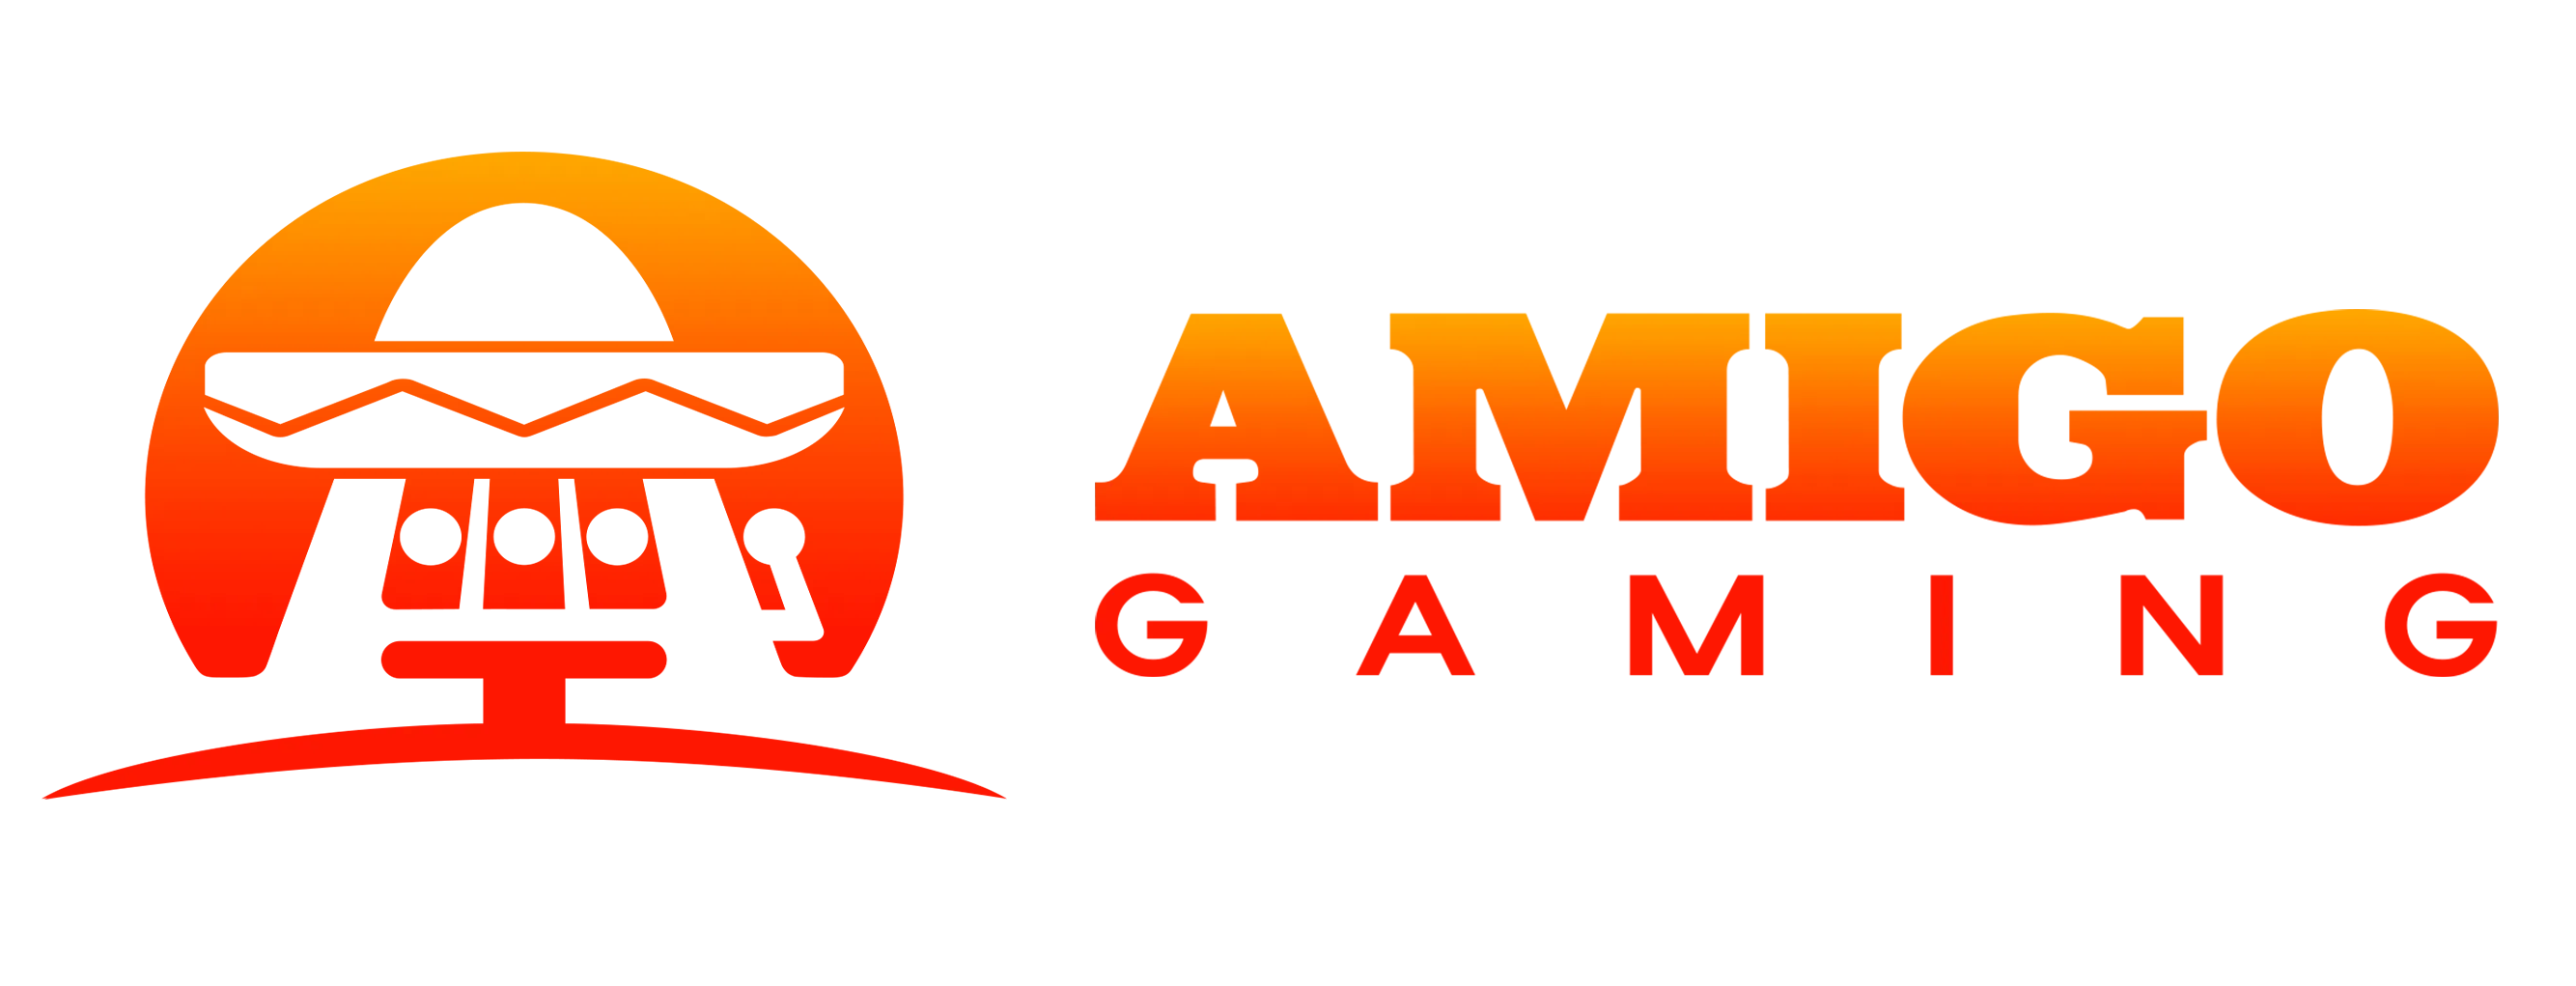 Amigo Gaming #2